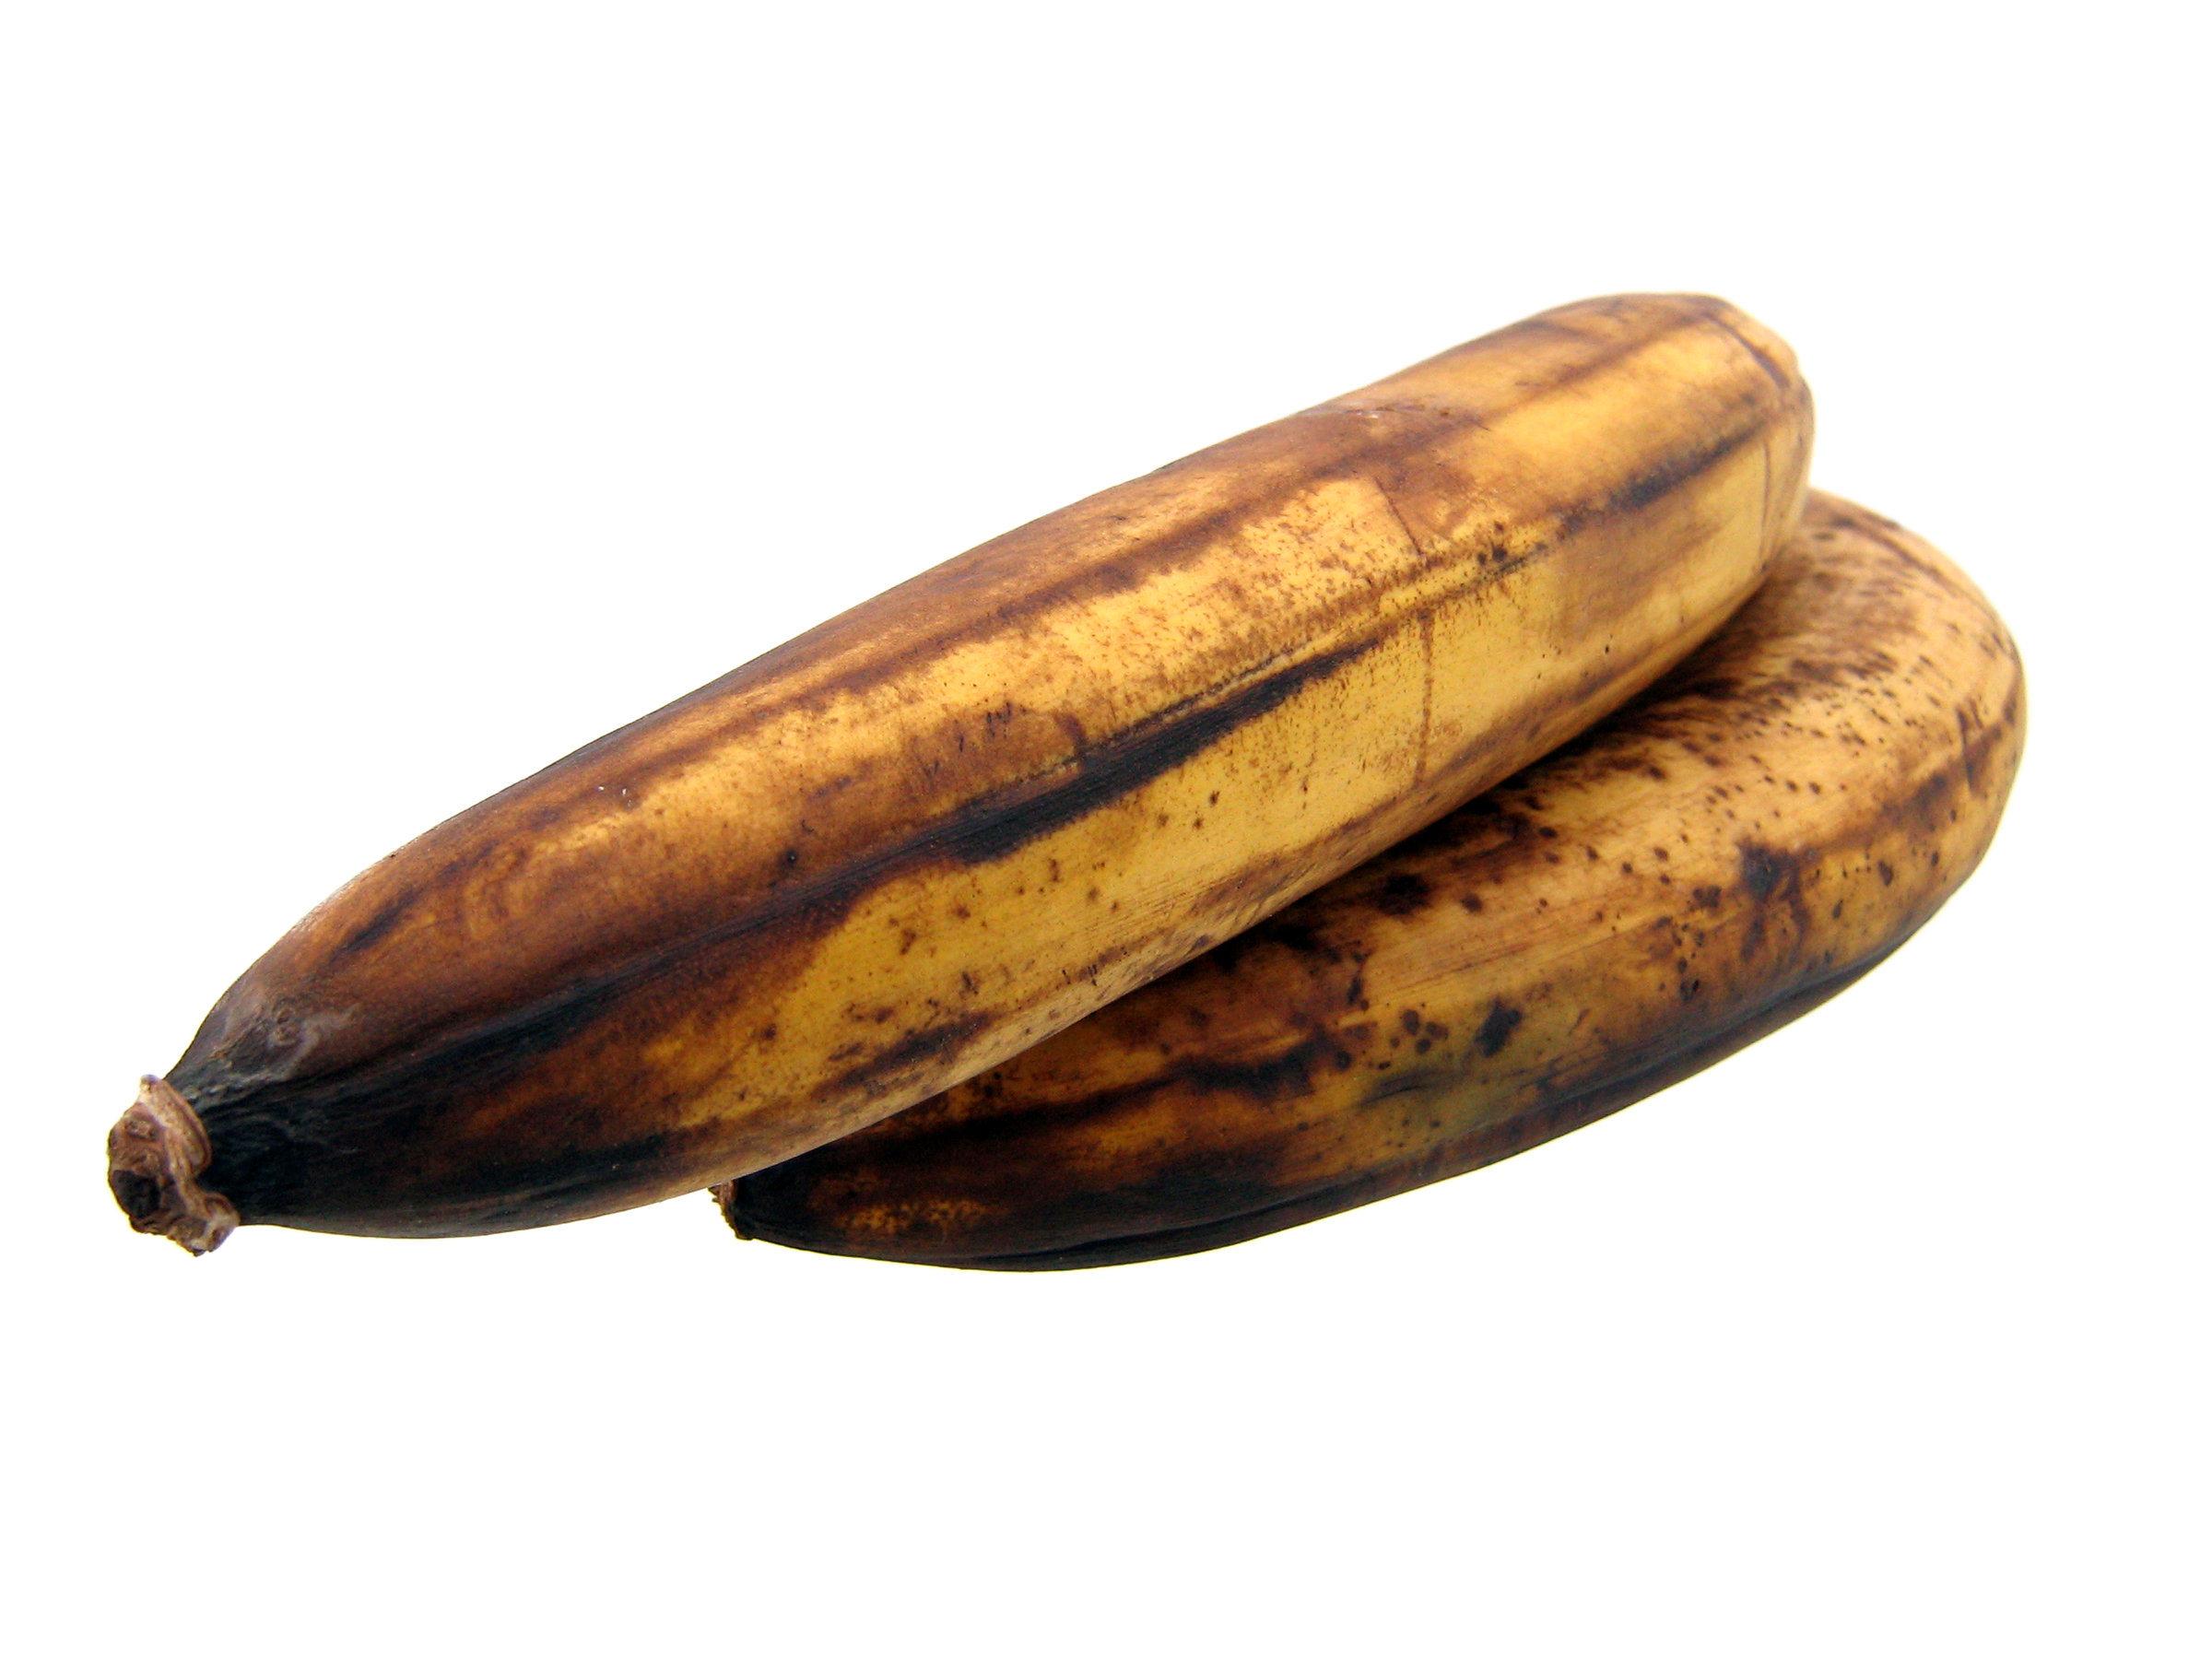 Old banana photo